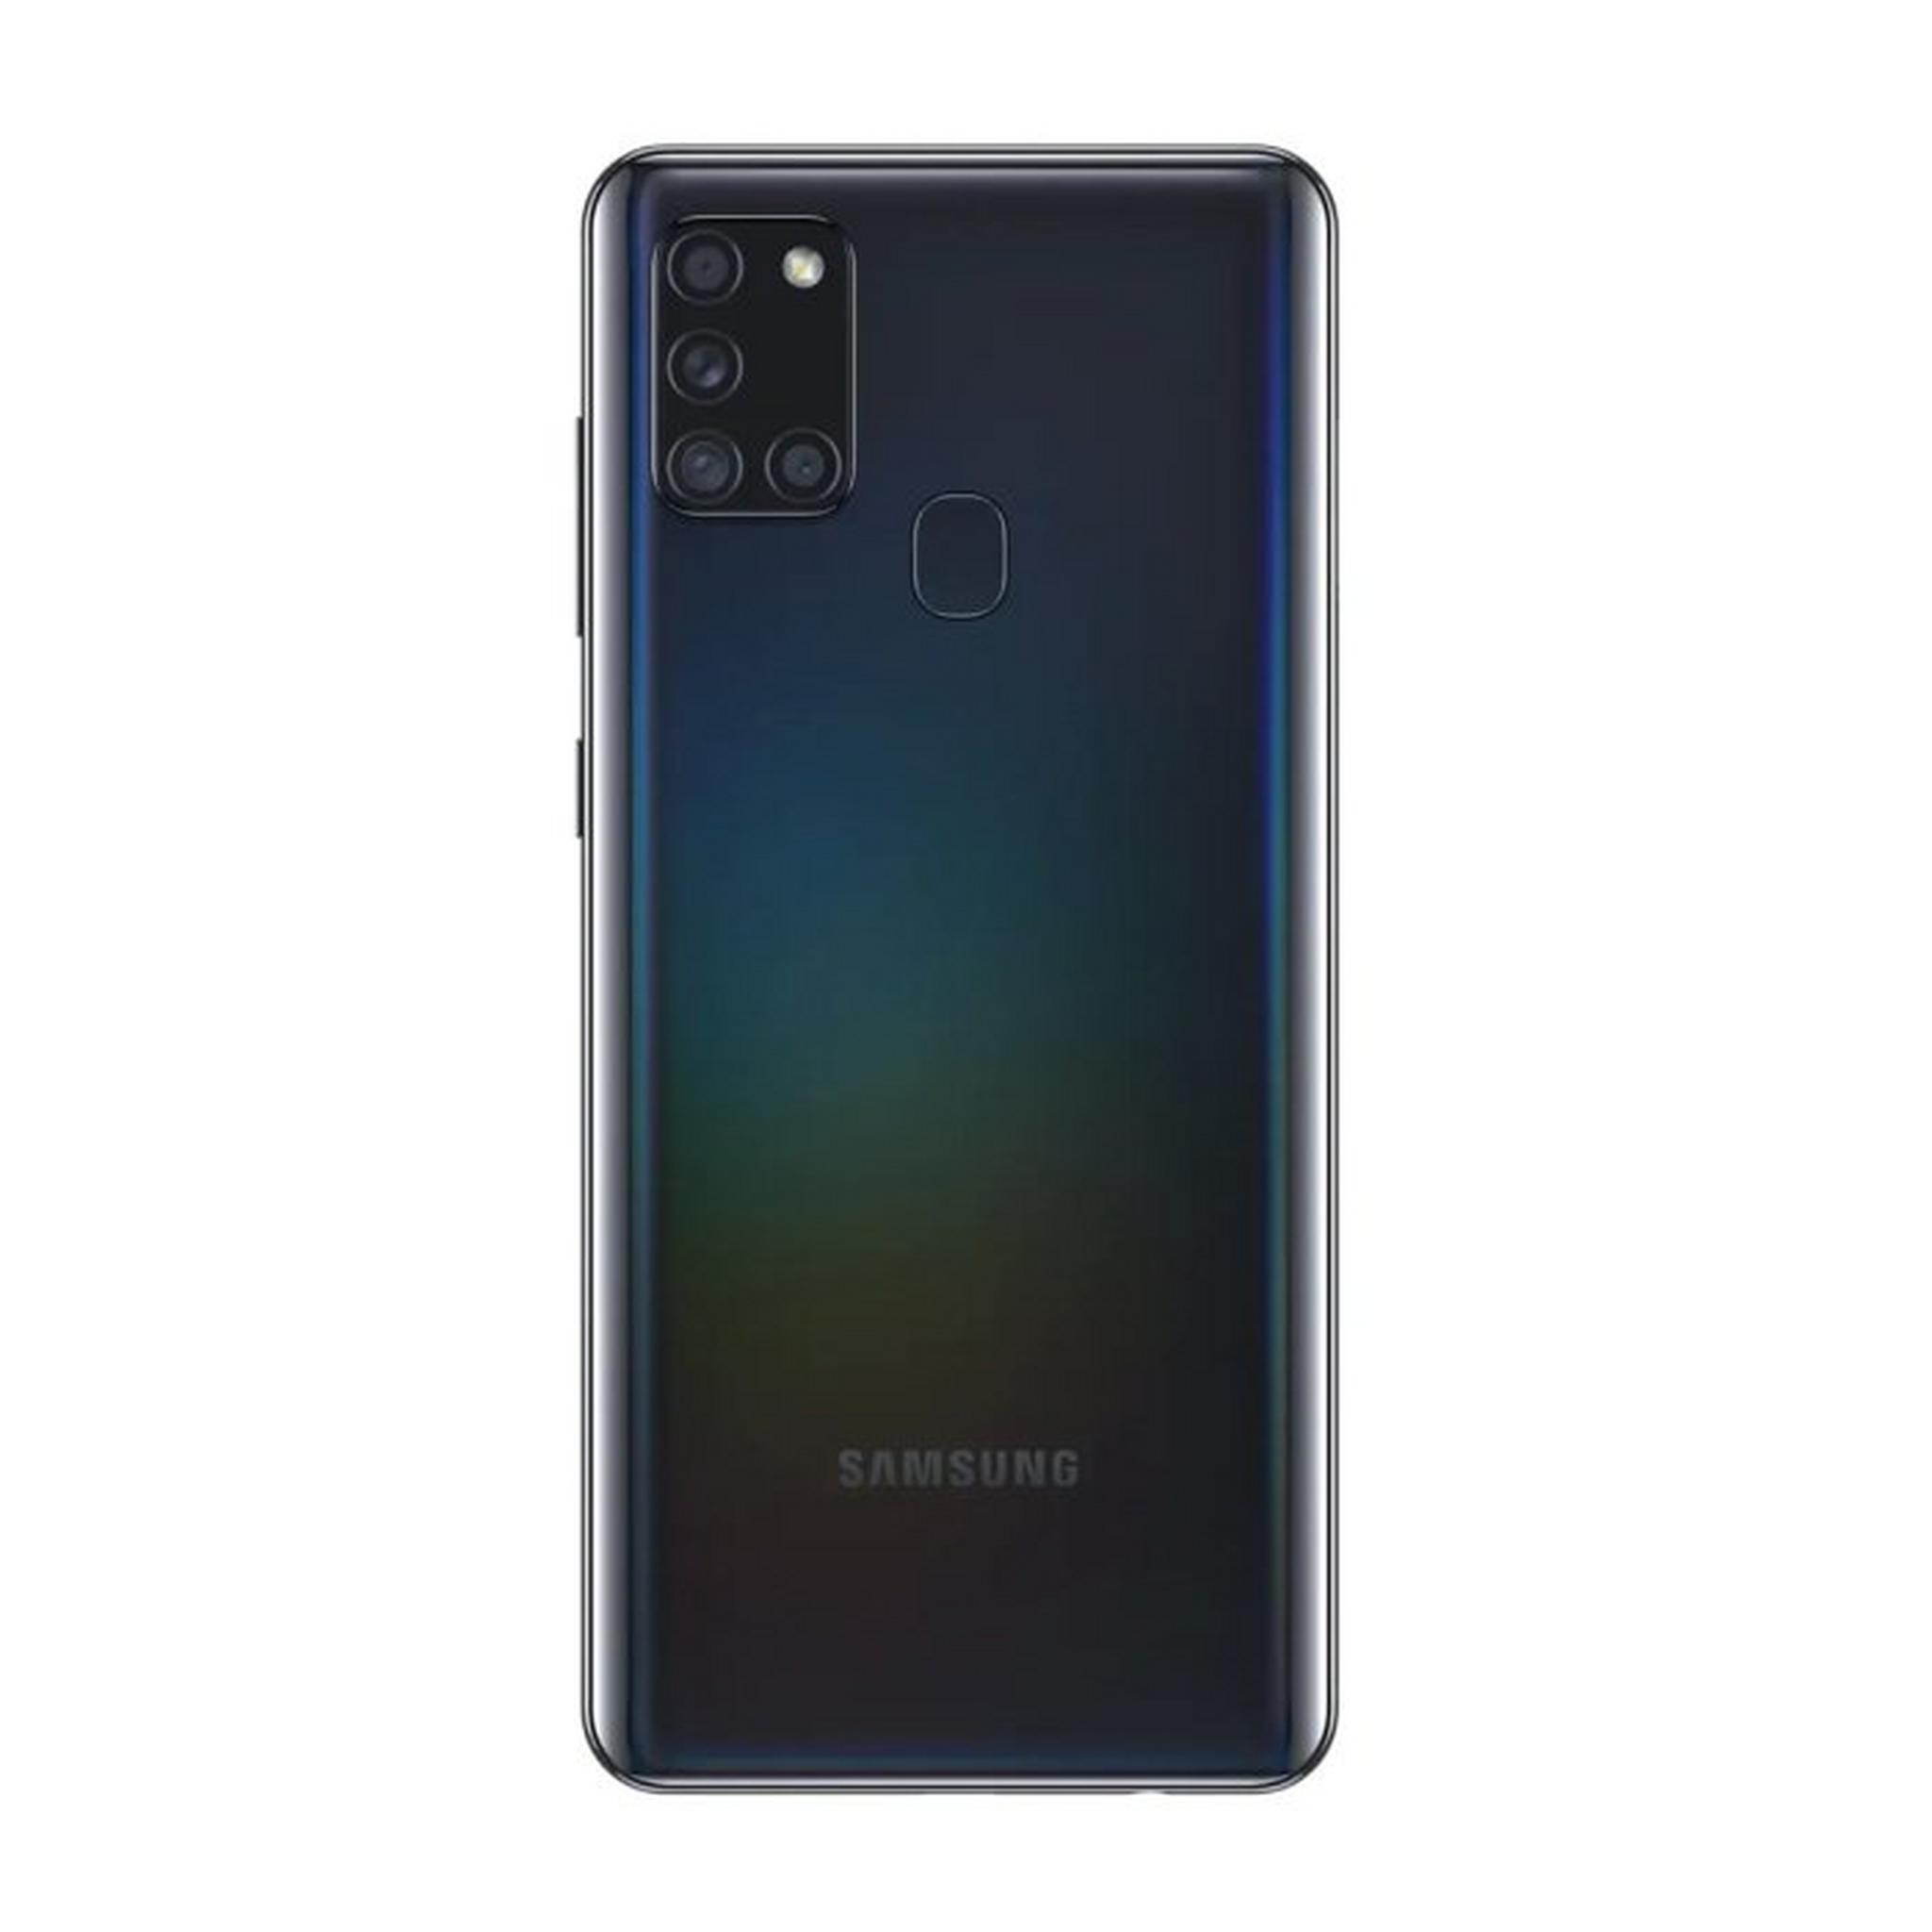 Samsung A21s 64GB Phone - Black